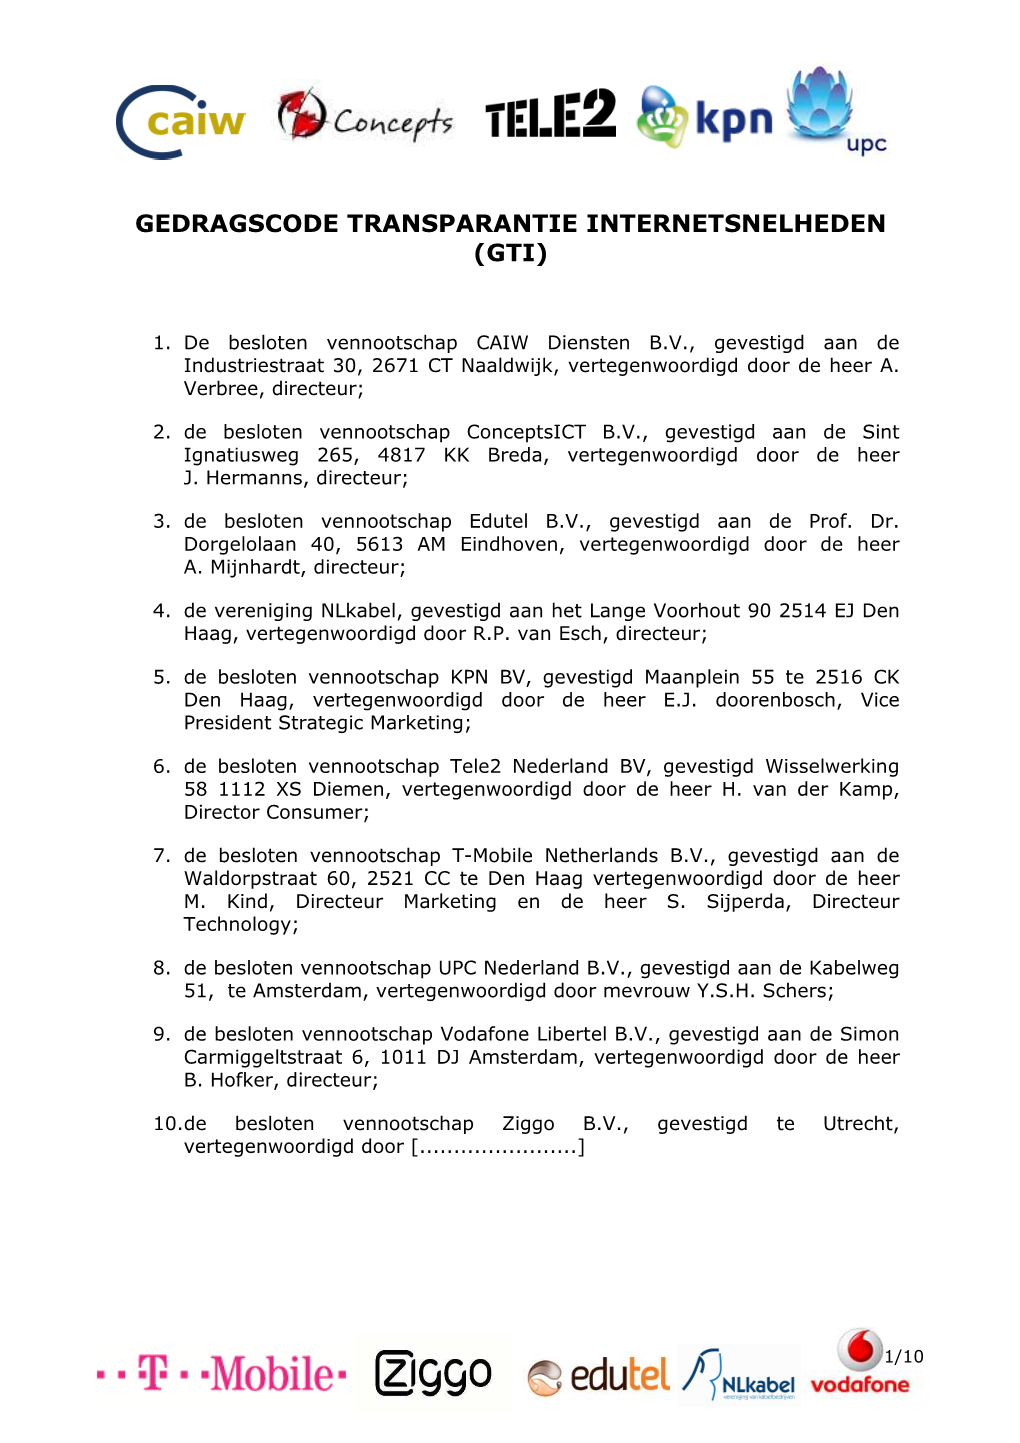 Gedragscode Transparantie Internetsnelheden (Gti)